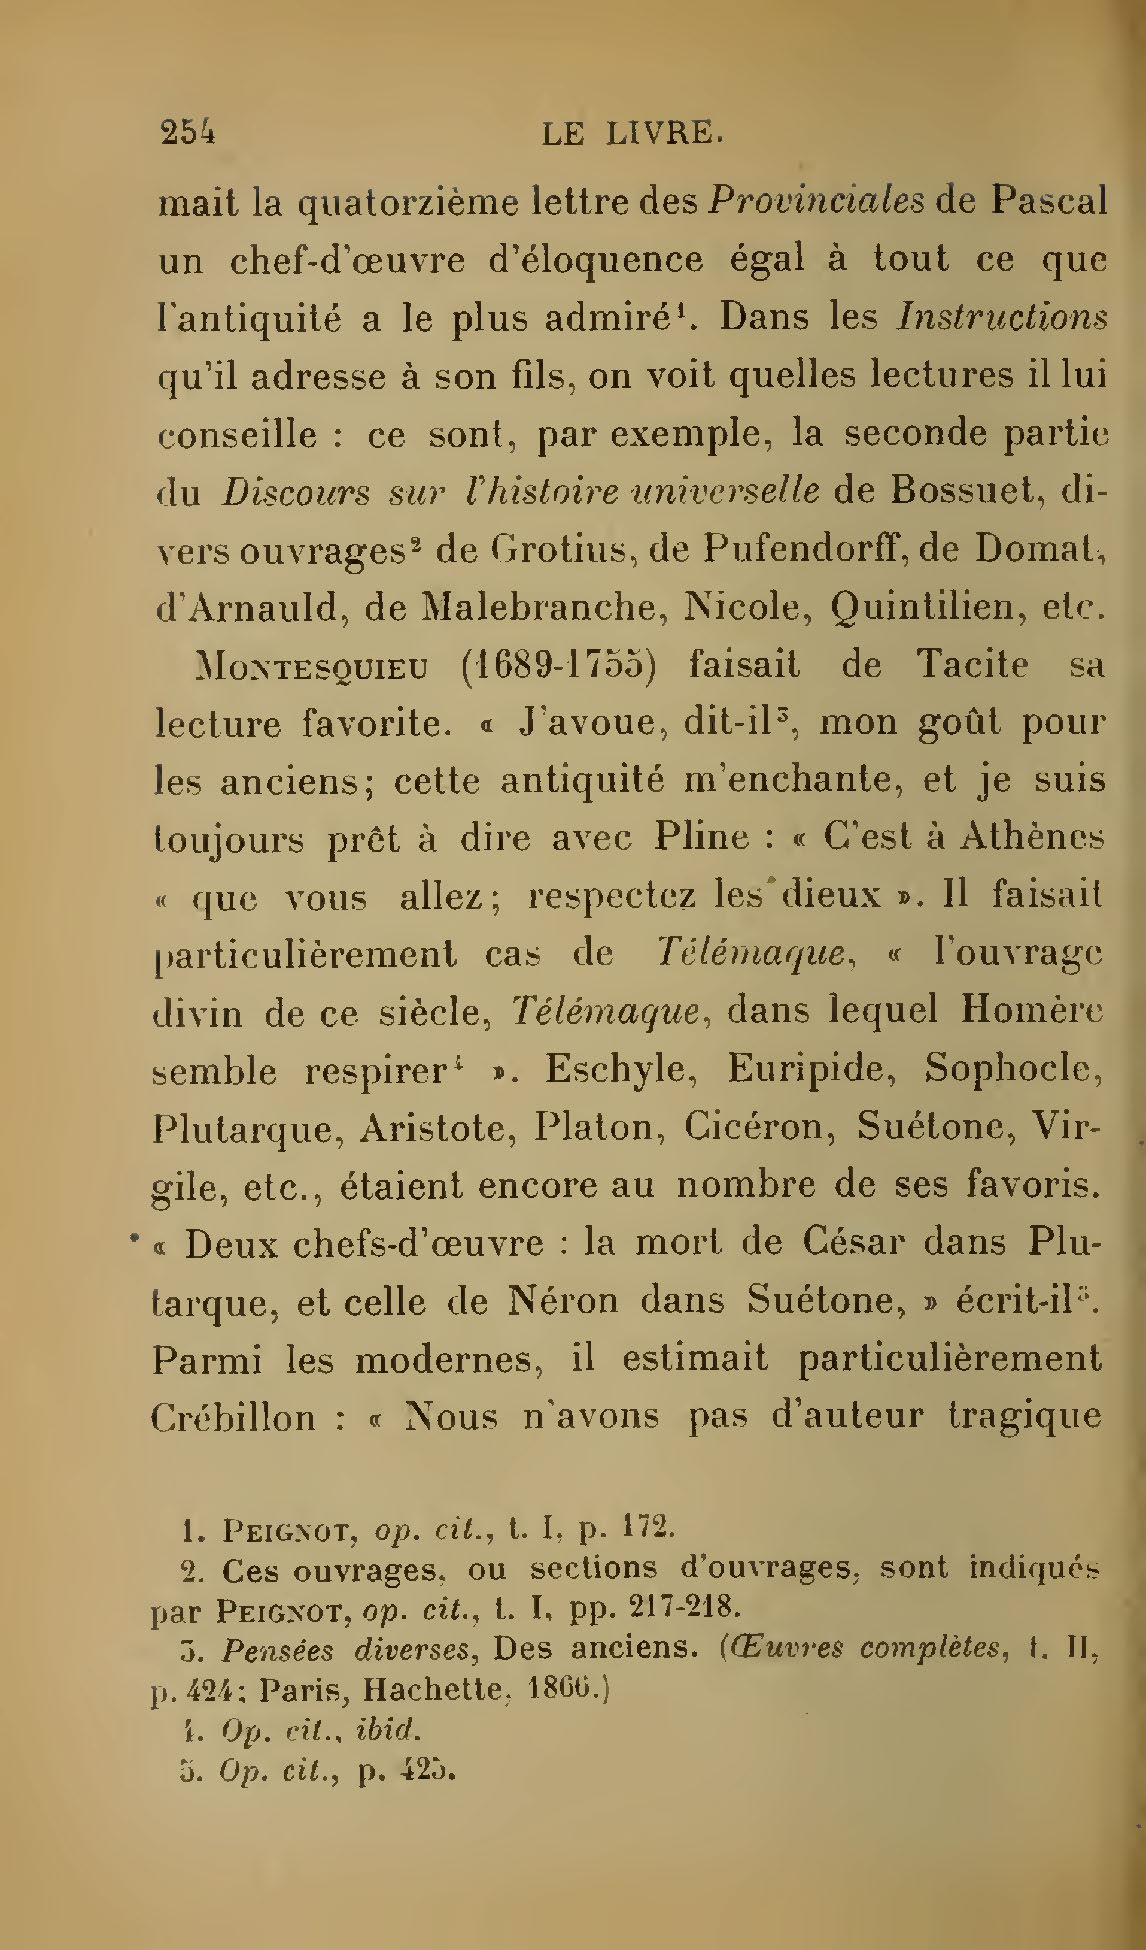 Albert Cim, Le Livre, t. I, p. 254.